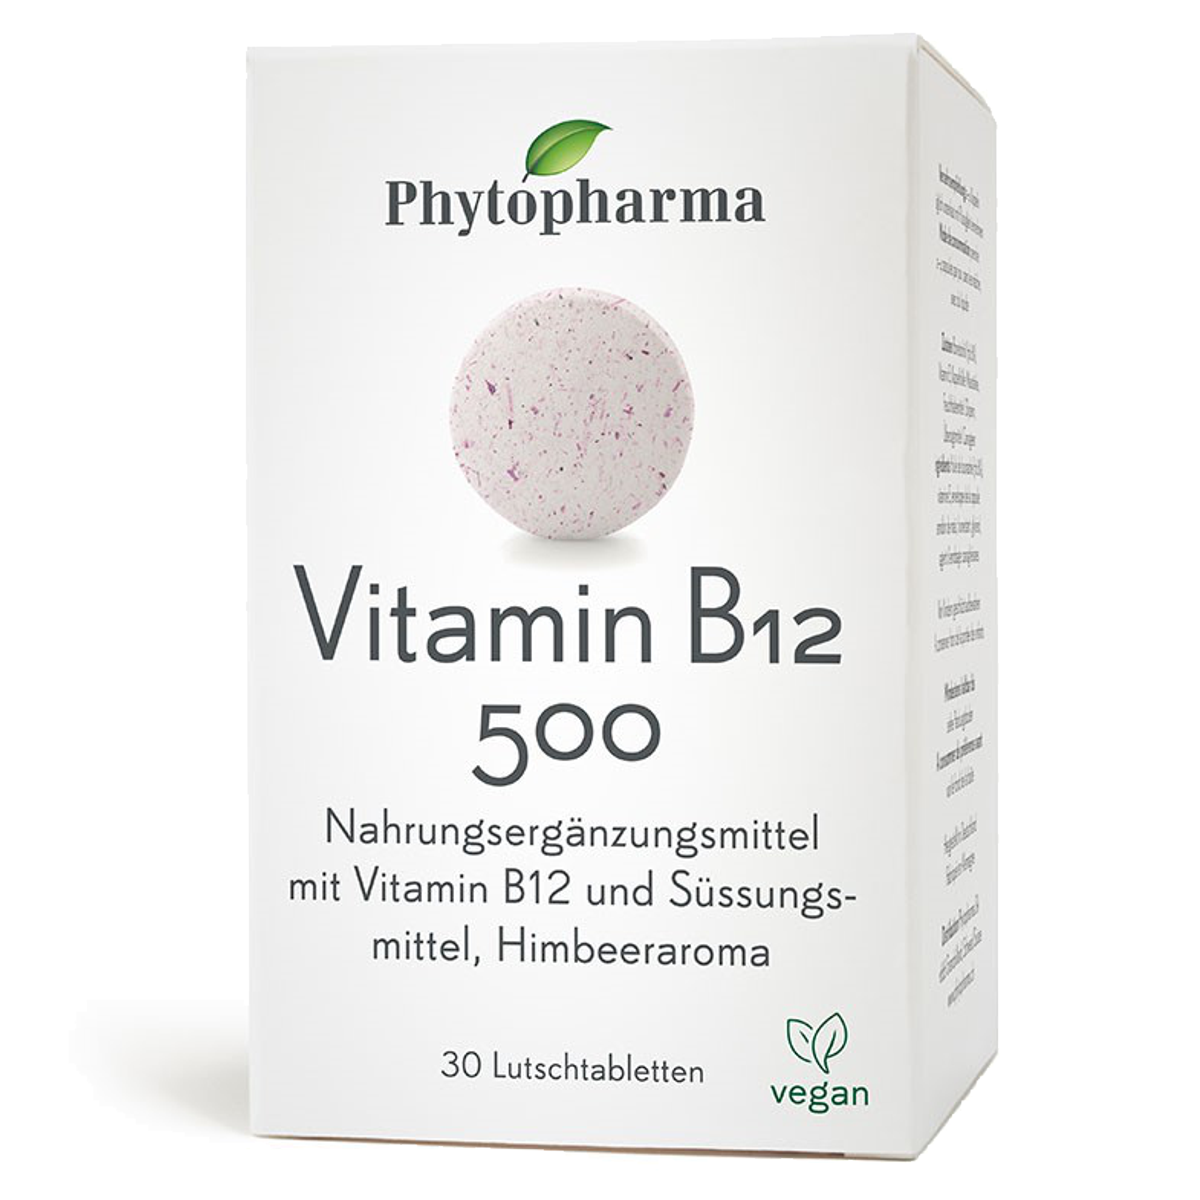 Phytopharma Vitamin B12 Lutschtabletten 500 mcg 30 Stück